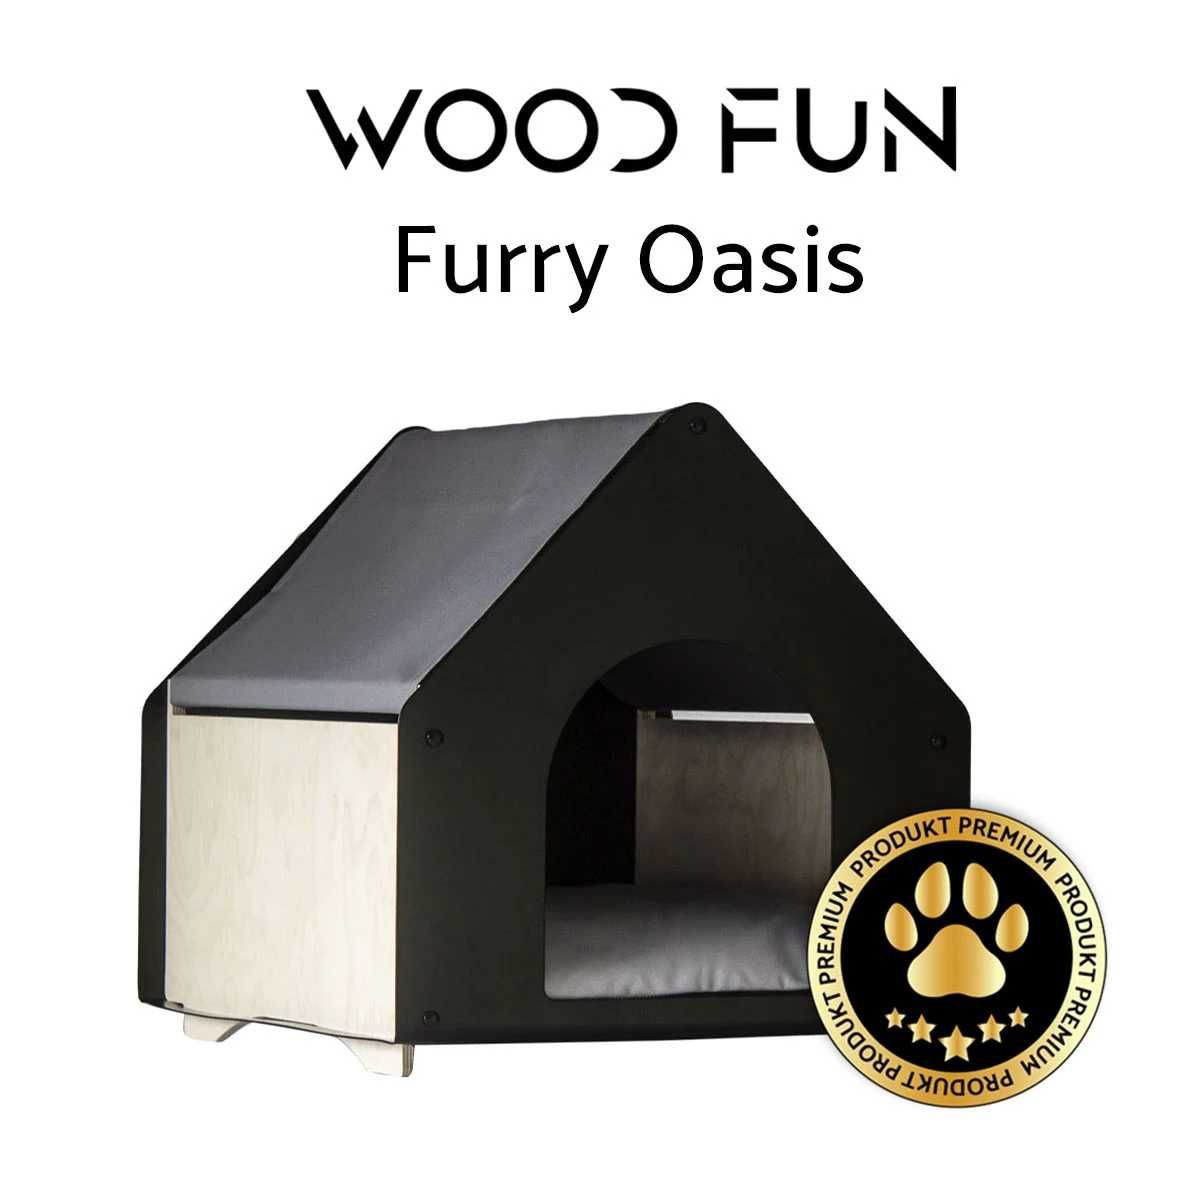 Wood Fun Furry Oasis domek legowisko dla kota, kolor czarny